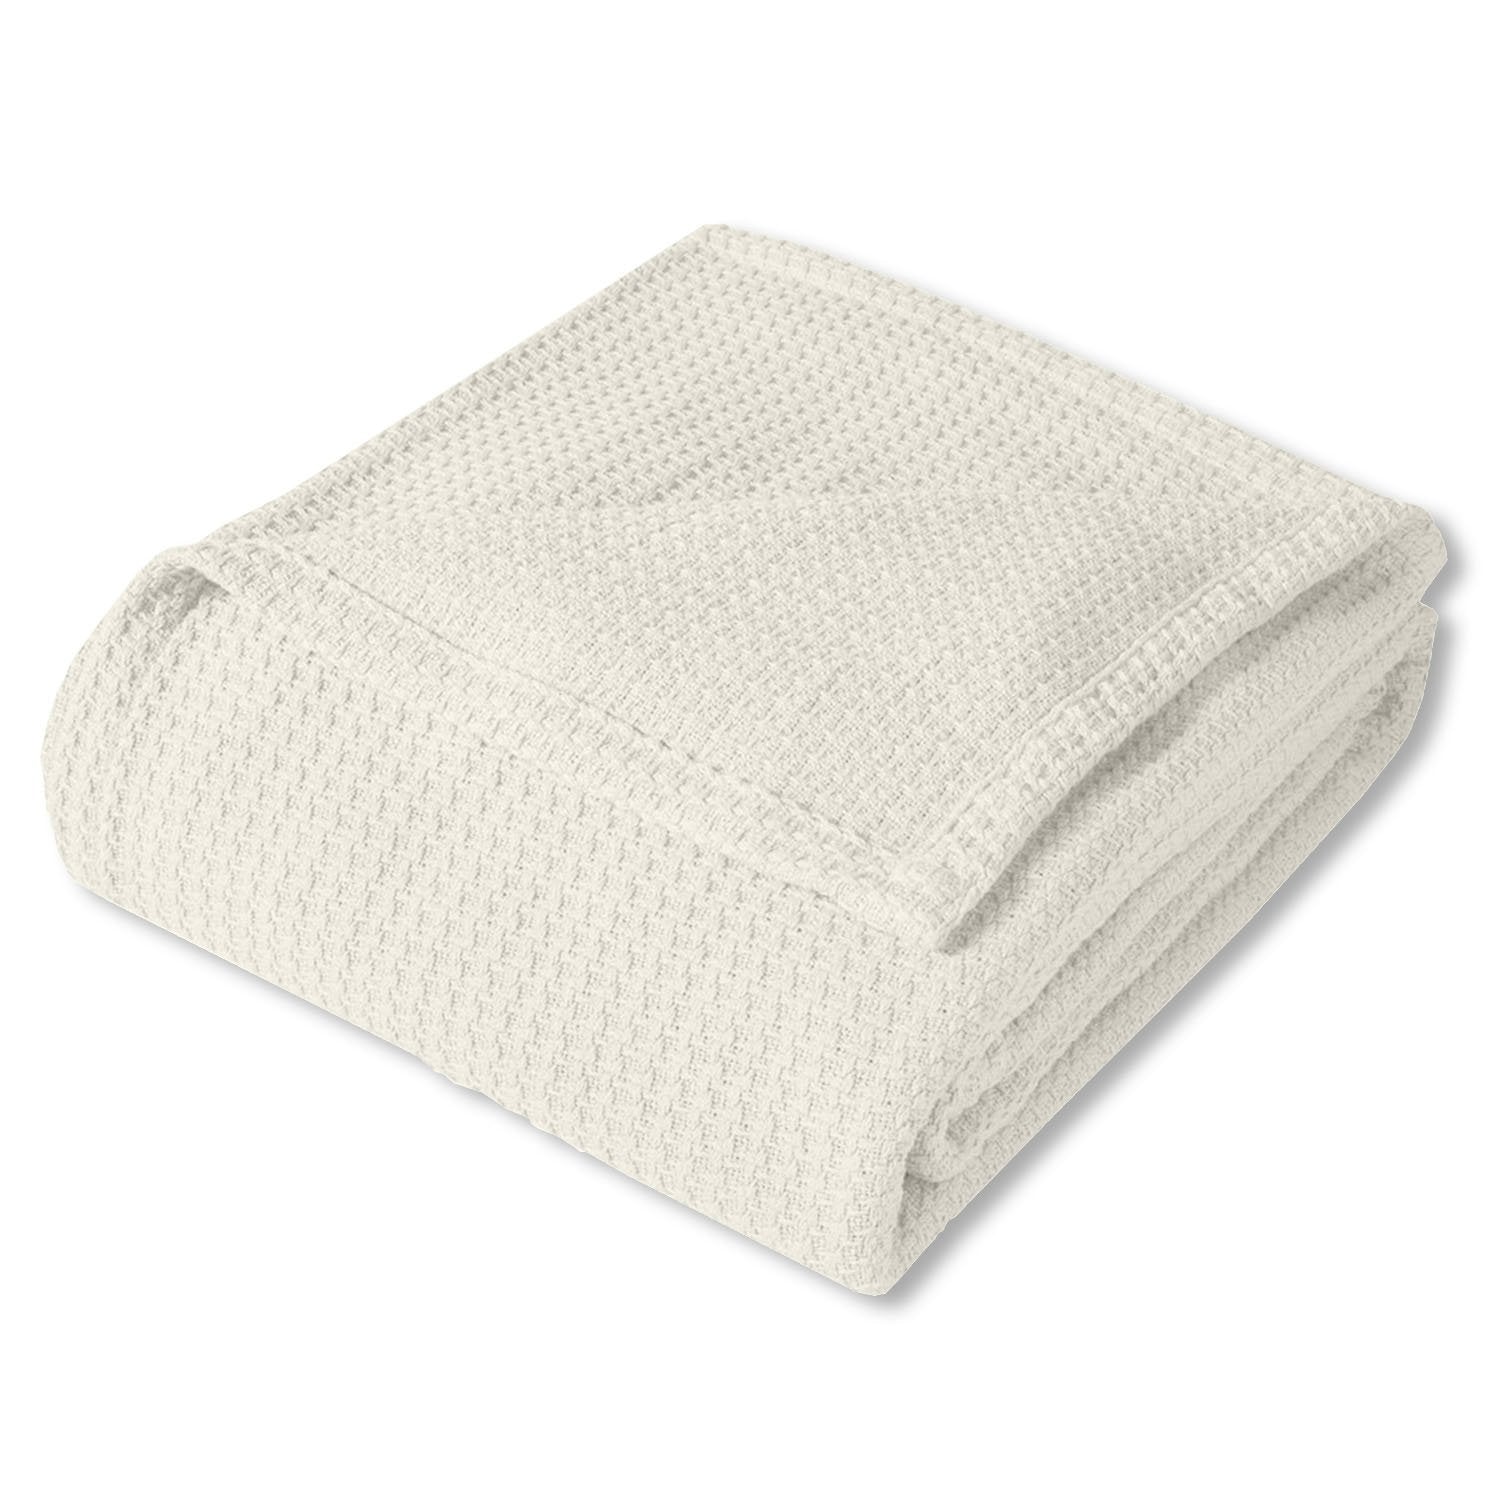 Basket Weave Cotton Blanket Ivory - Folded